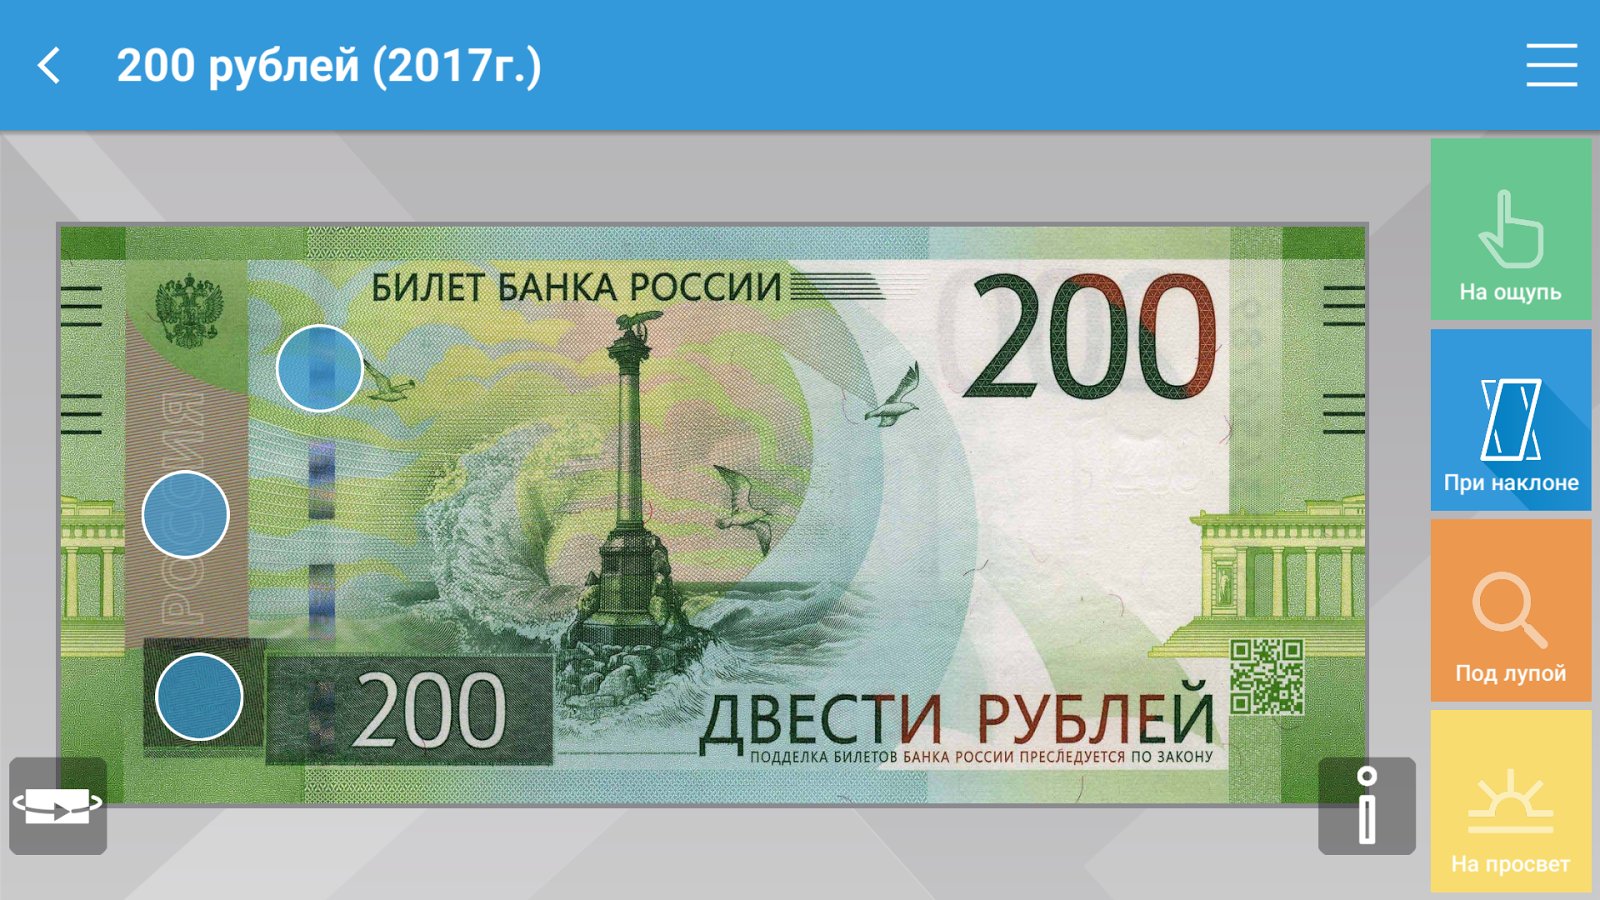 200 рублей метр. Купюра 200 рублей. 200 Рублей купюра 2017. Двести рублей 2017. 200 Рублей банкнота.